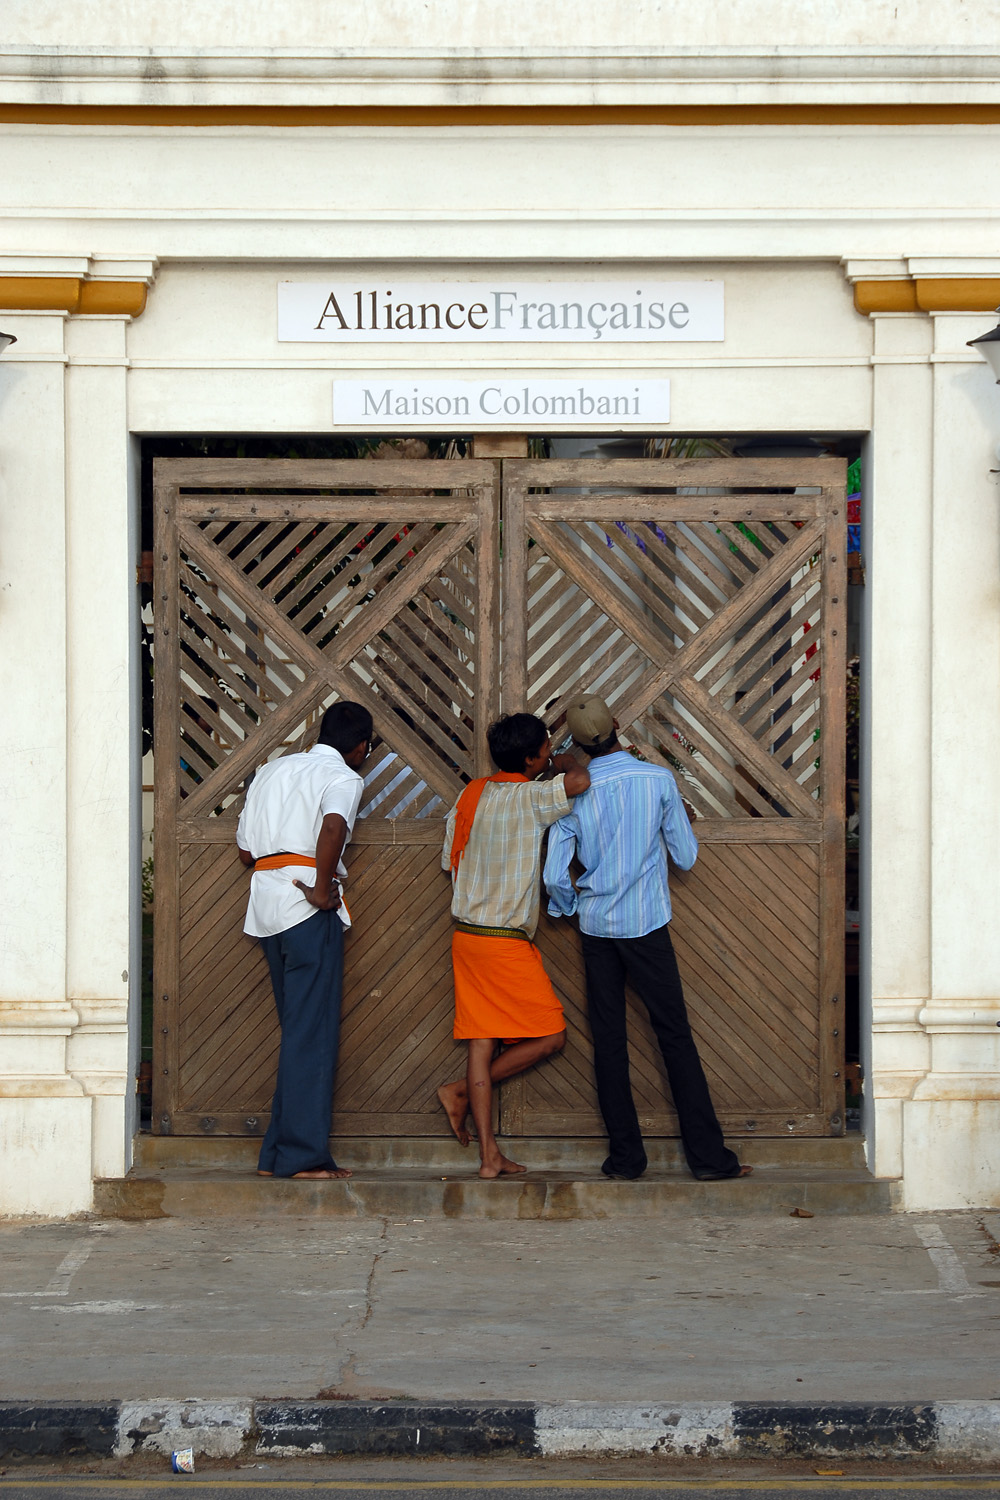 bill-hocker-alliance-francaise-pondicherry-india-2007